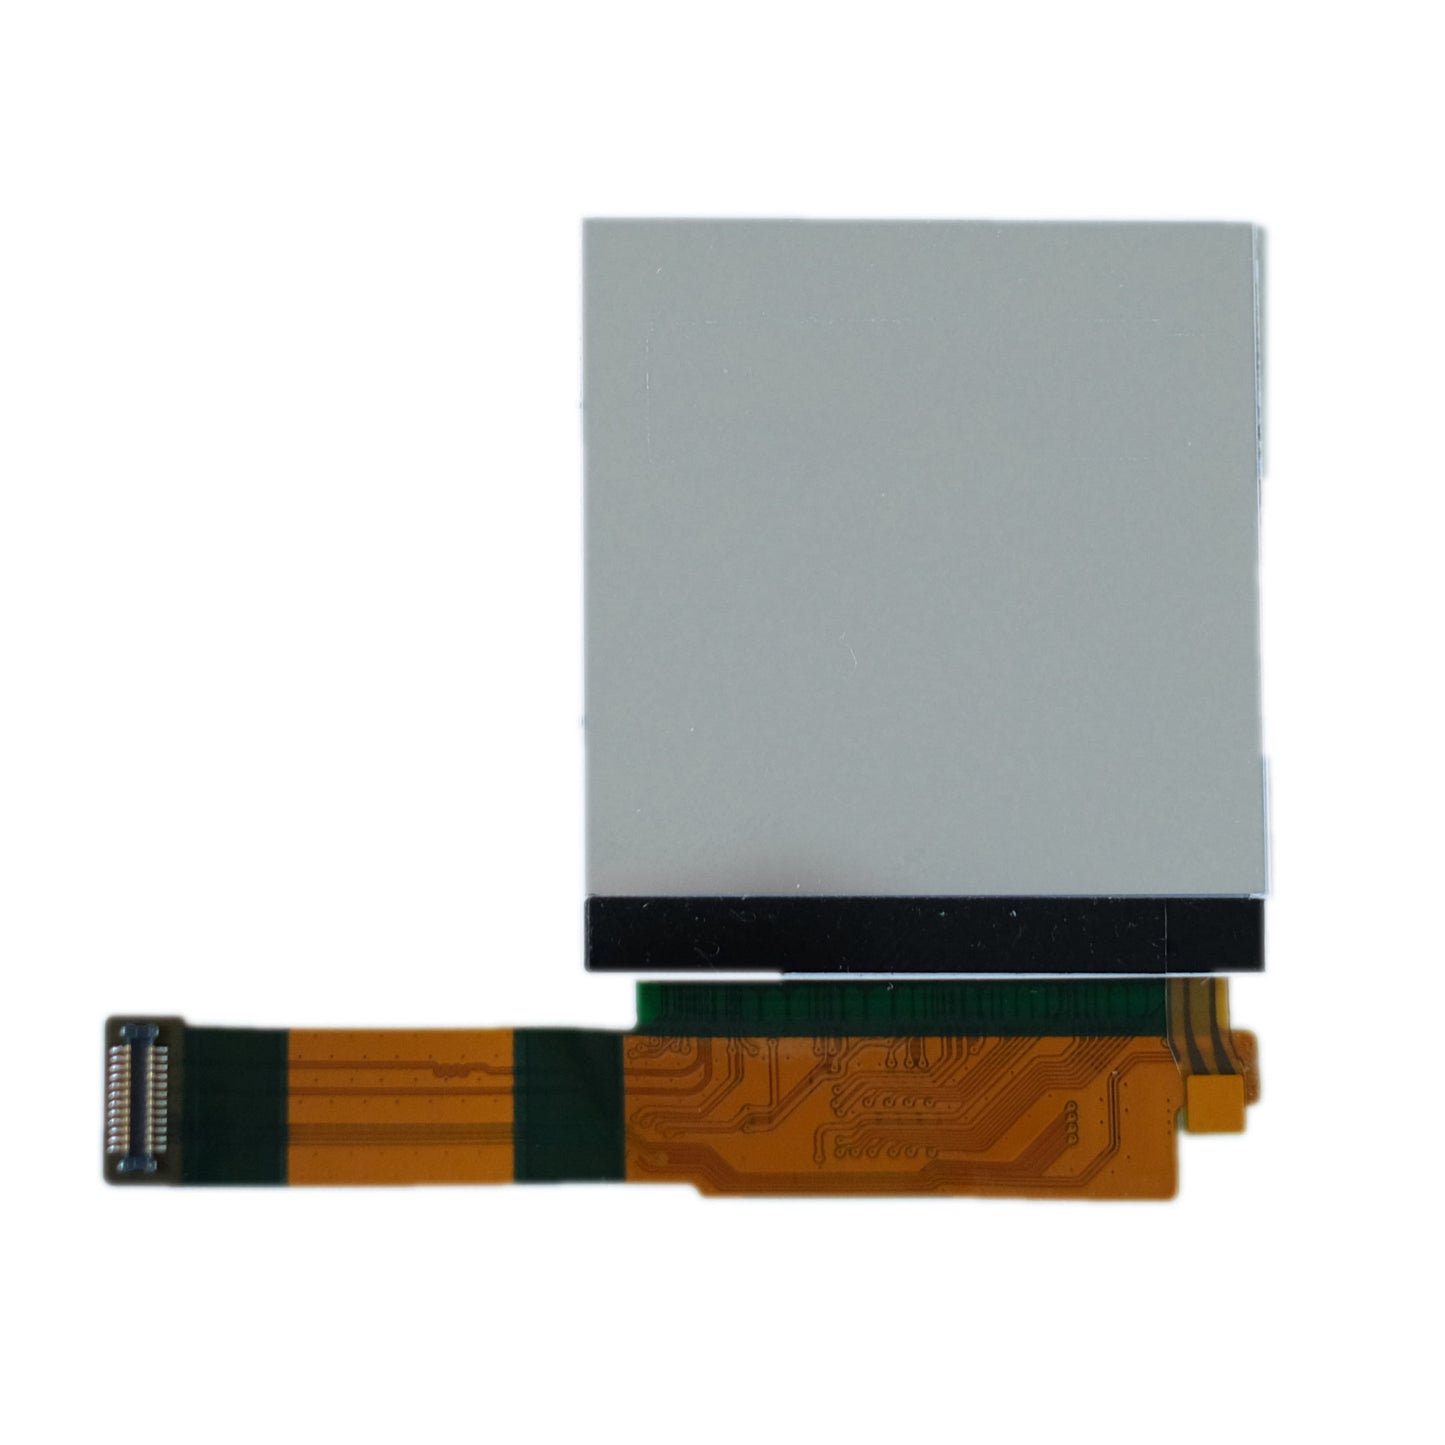 Back of 1.6-inch TFT Transflective Display Panel